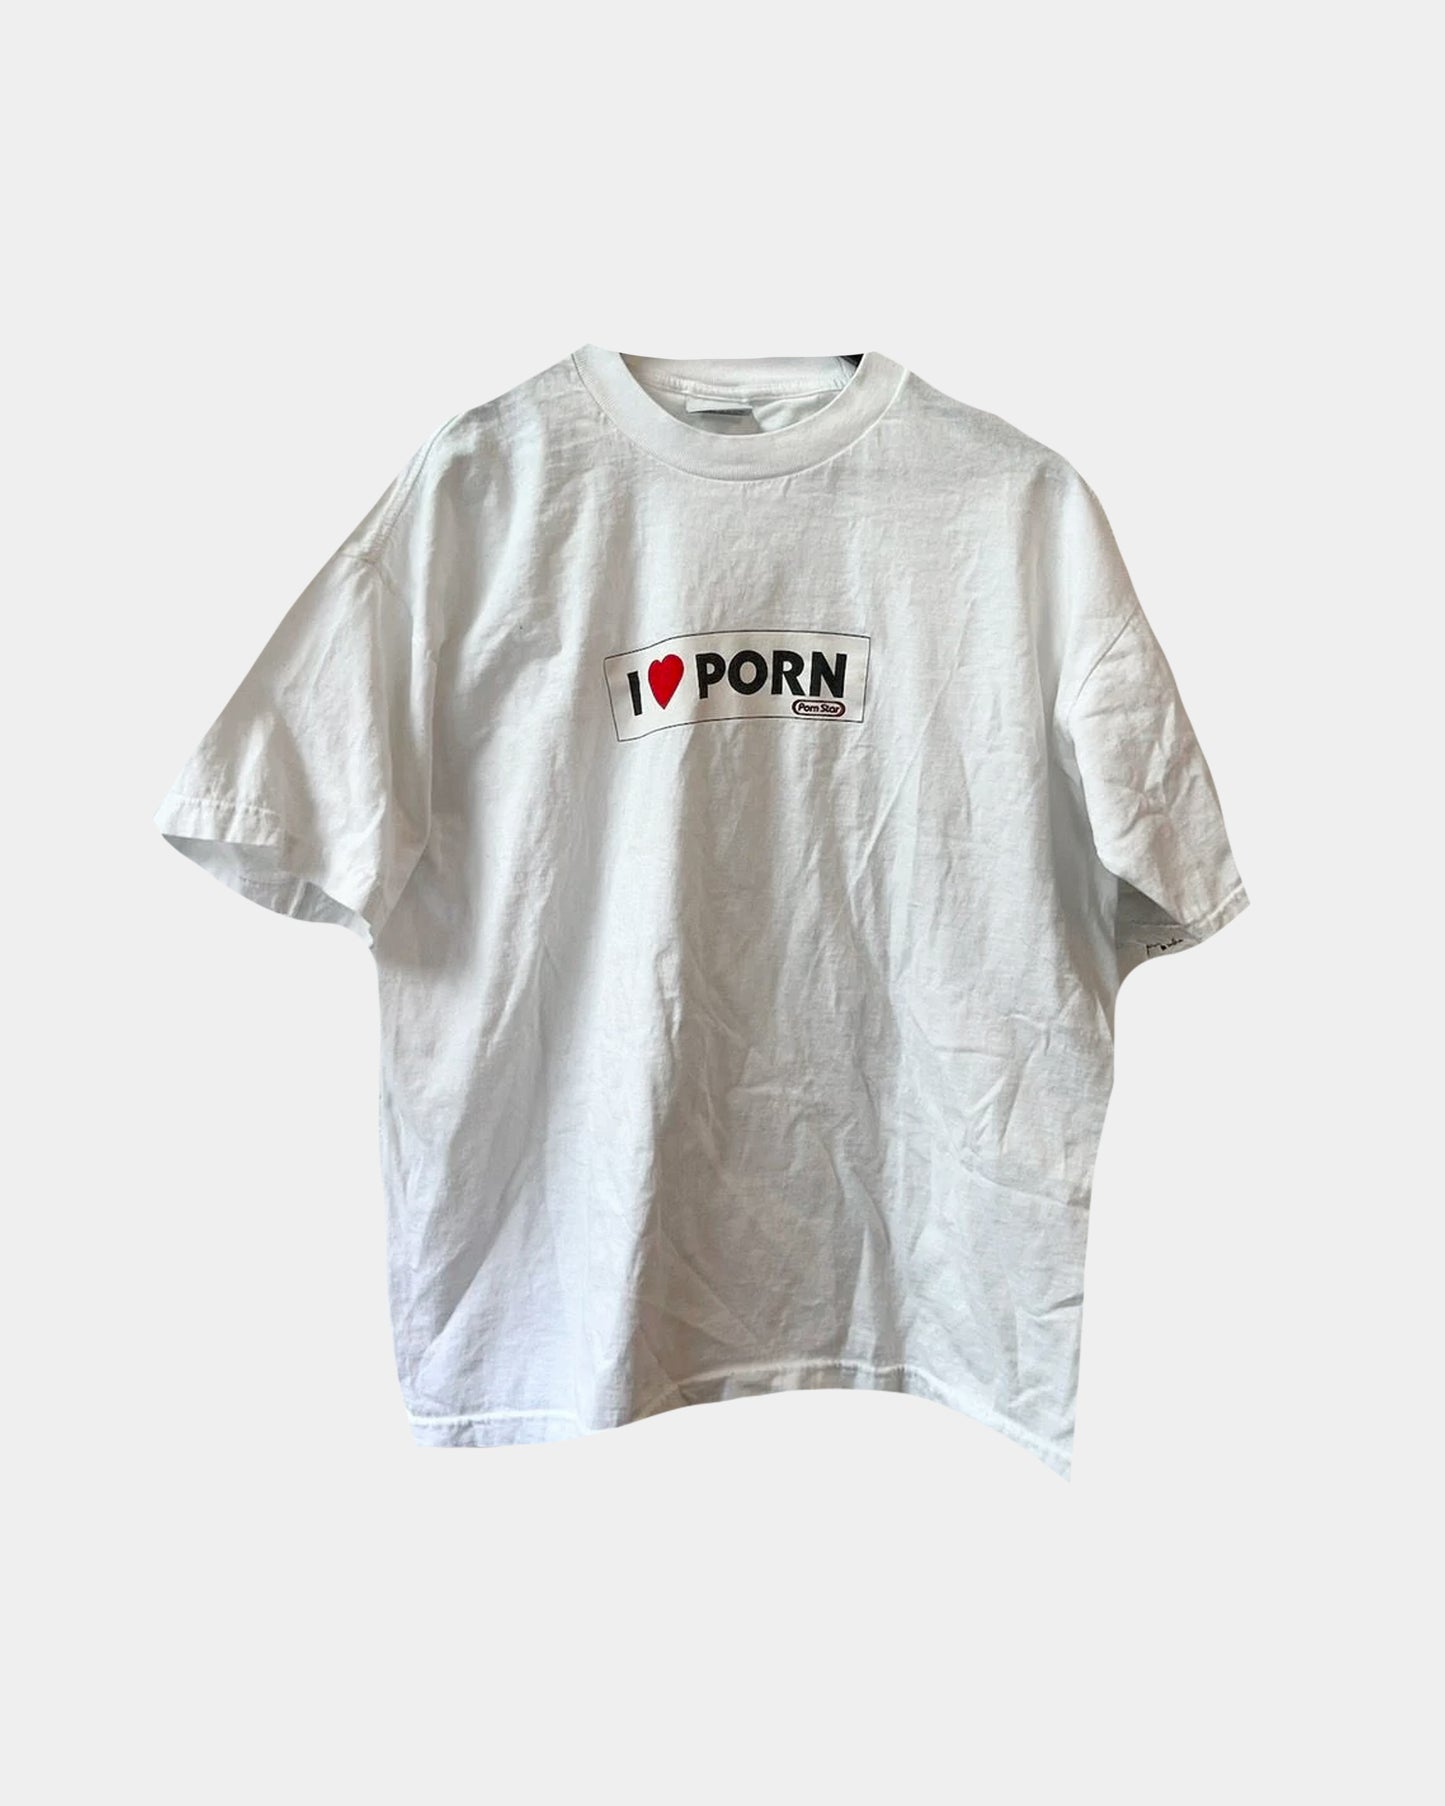 Vintage Brand PORNSTAR PORN STAR ‘ I LOVE PORN shirt